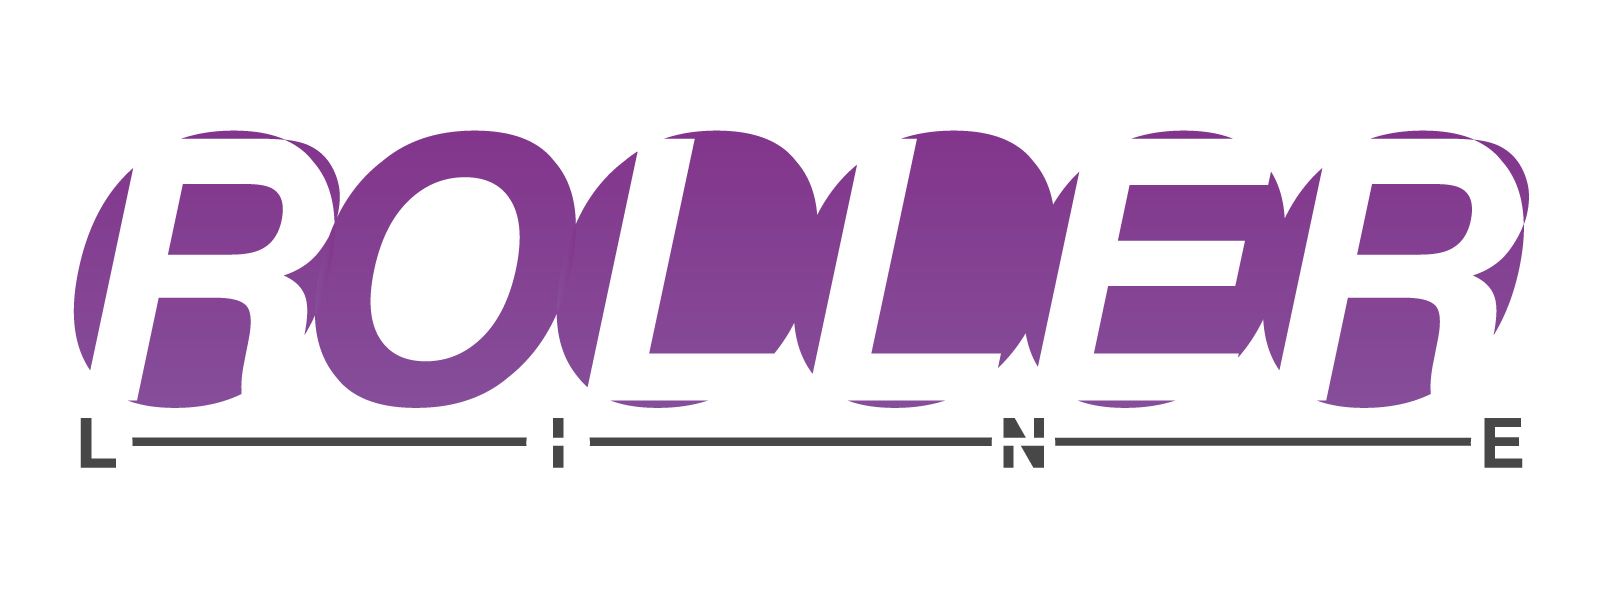 Логотип для Rollerline или Roller Line - дизайнер Allitera